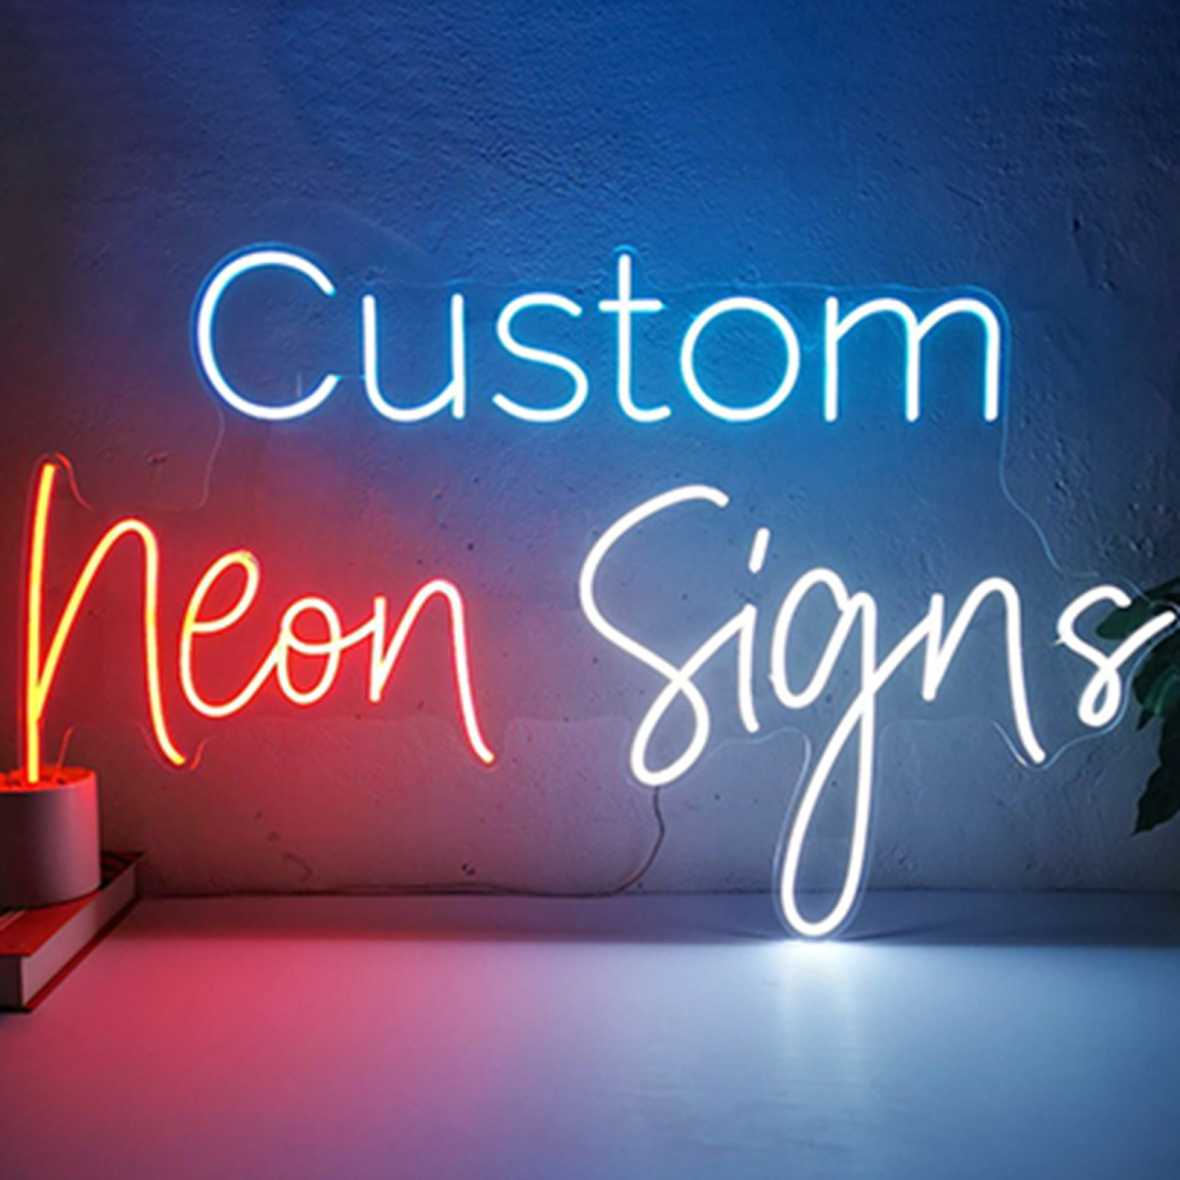 17. Custom neon sign